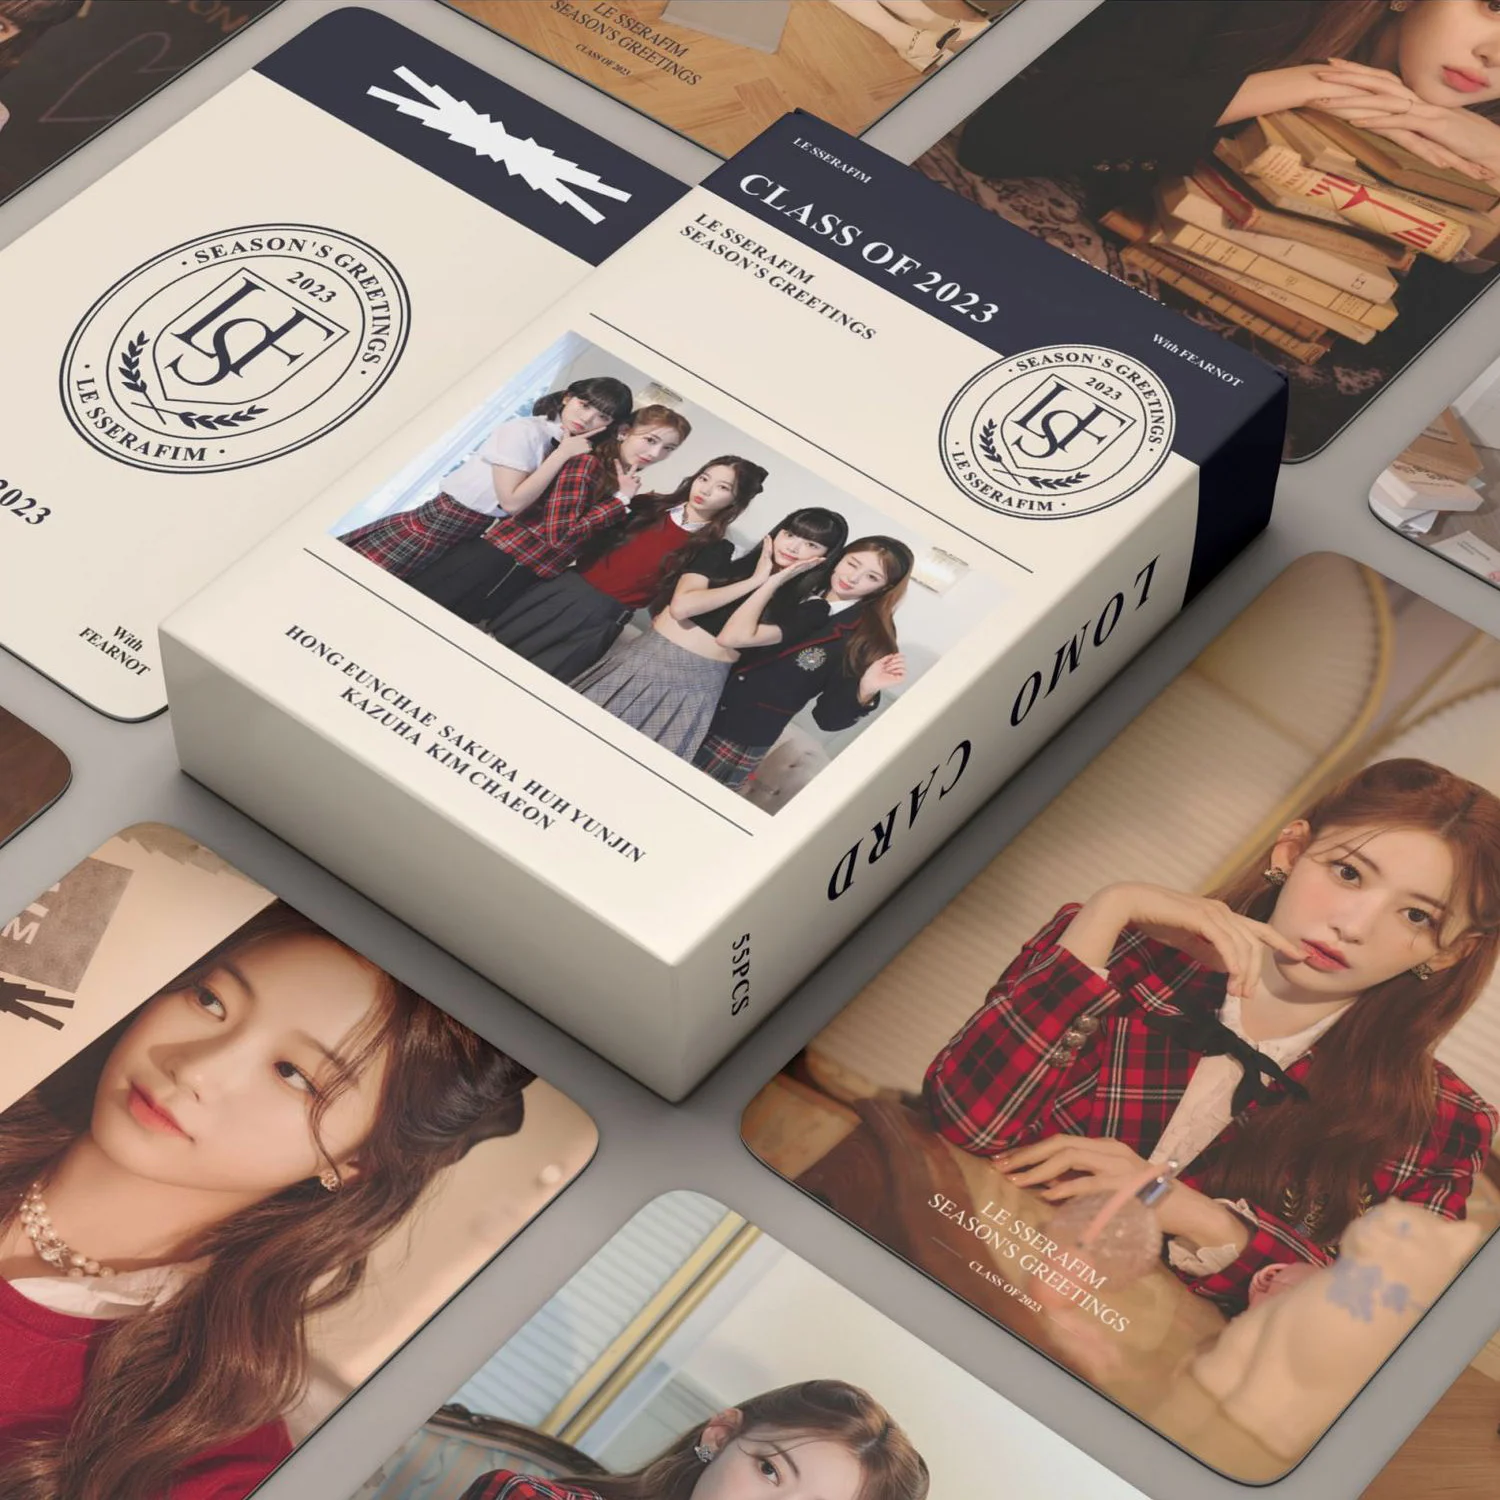 

55PCS/Set Kpop LESSERAFIM Photocards Lomo 2023 SEASON'S GREETINGS Card ITZY IVE Red Velvet Stayc Photo Cards New Album 2022